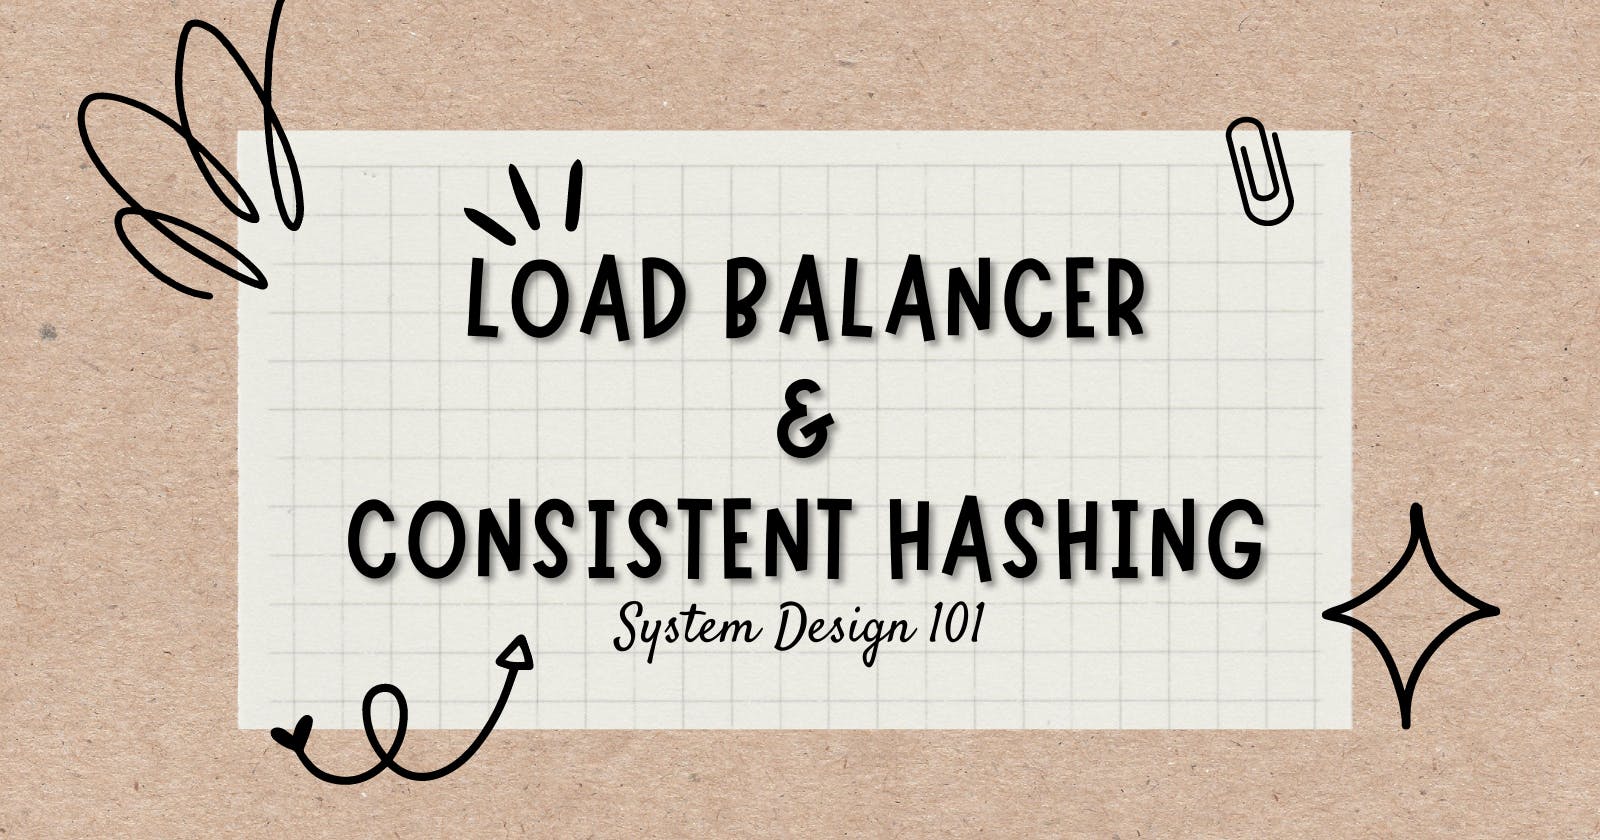 "Maximizing Efficiency: The Integration of Consistent Hashing and Load Balancing"